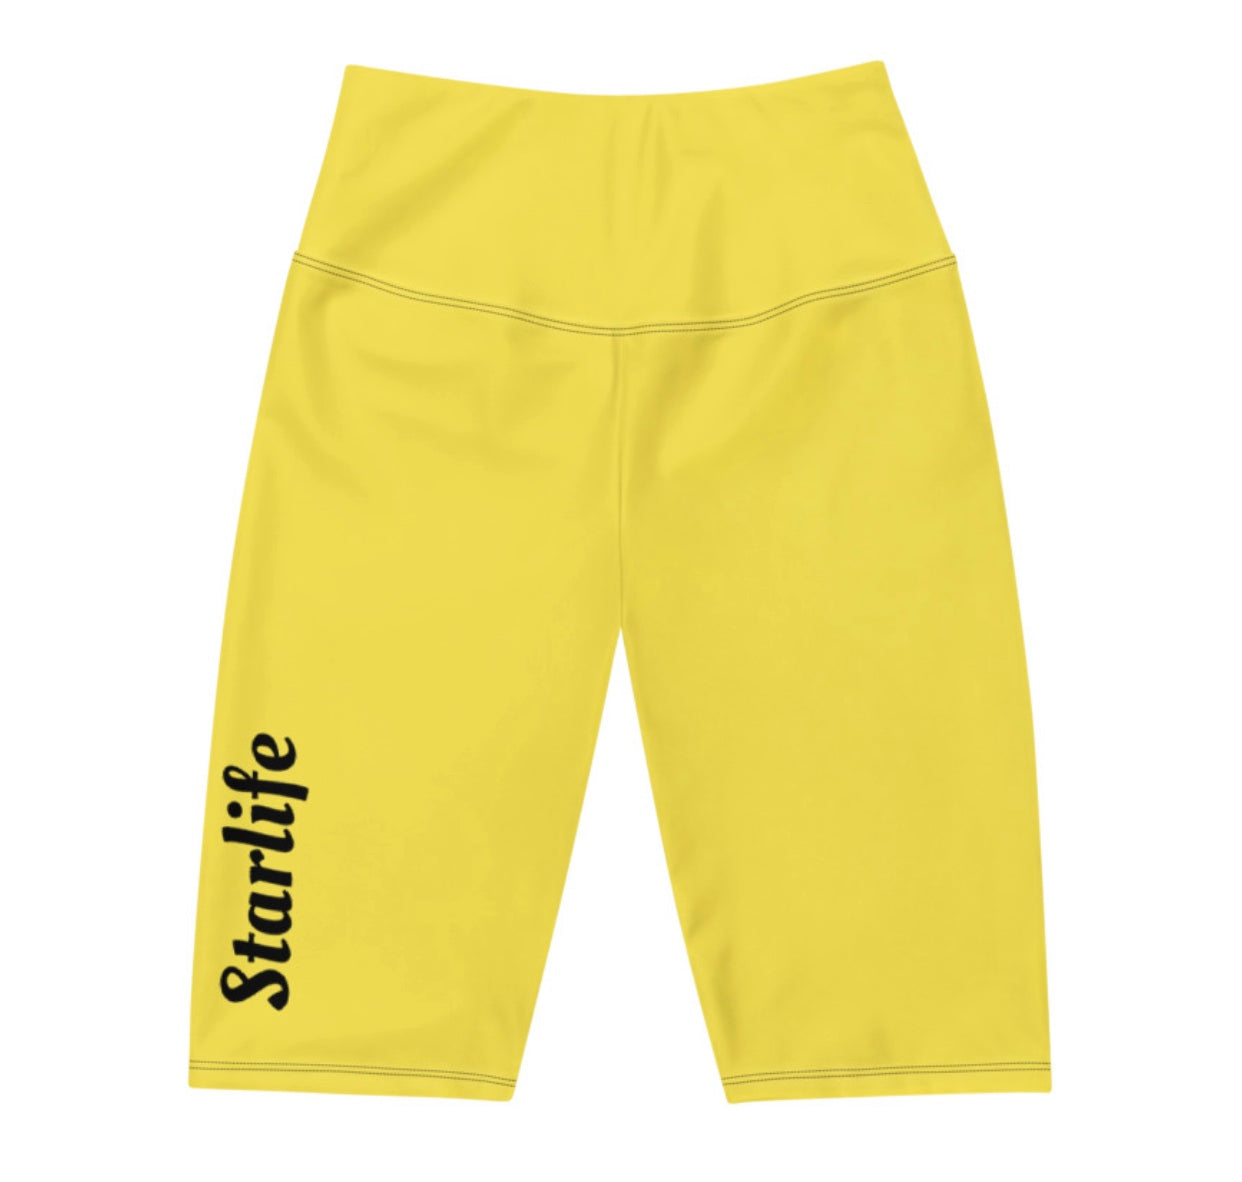 Starlife Women’s Biker Shorts (Electric Yellow)